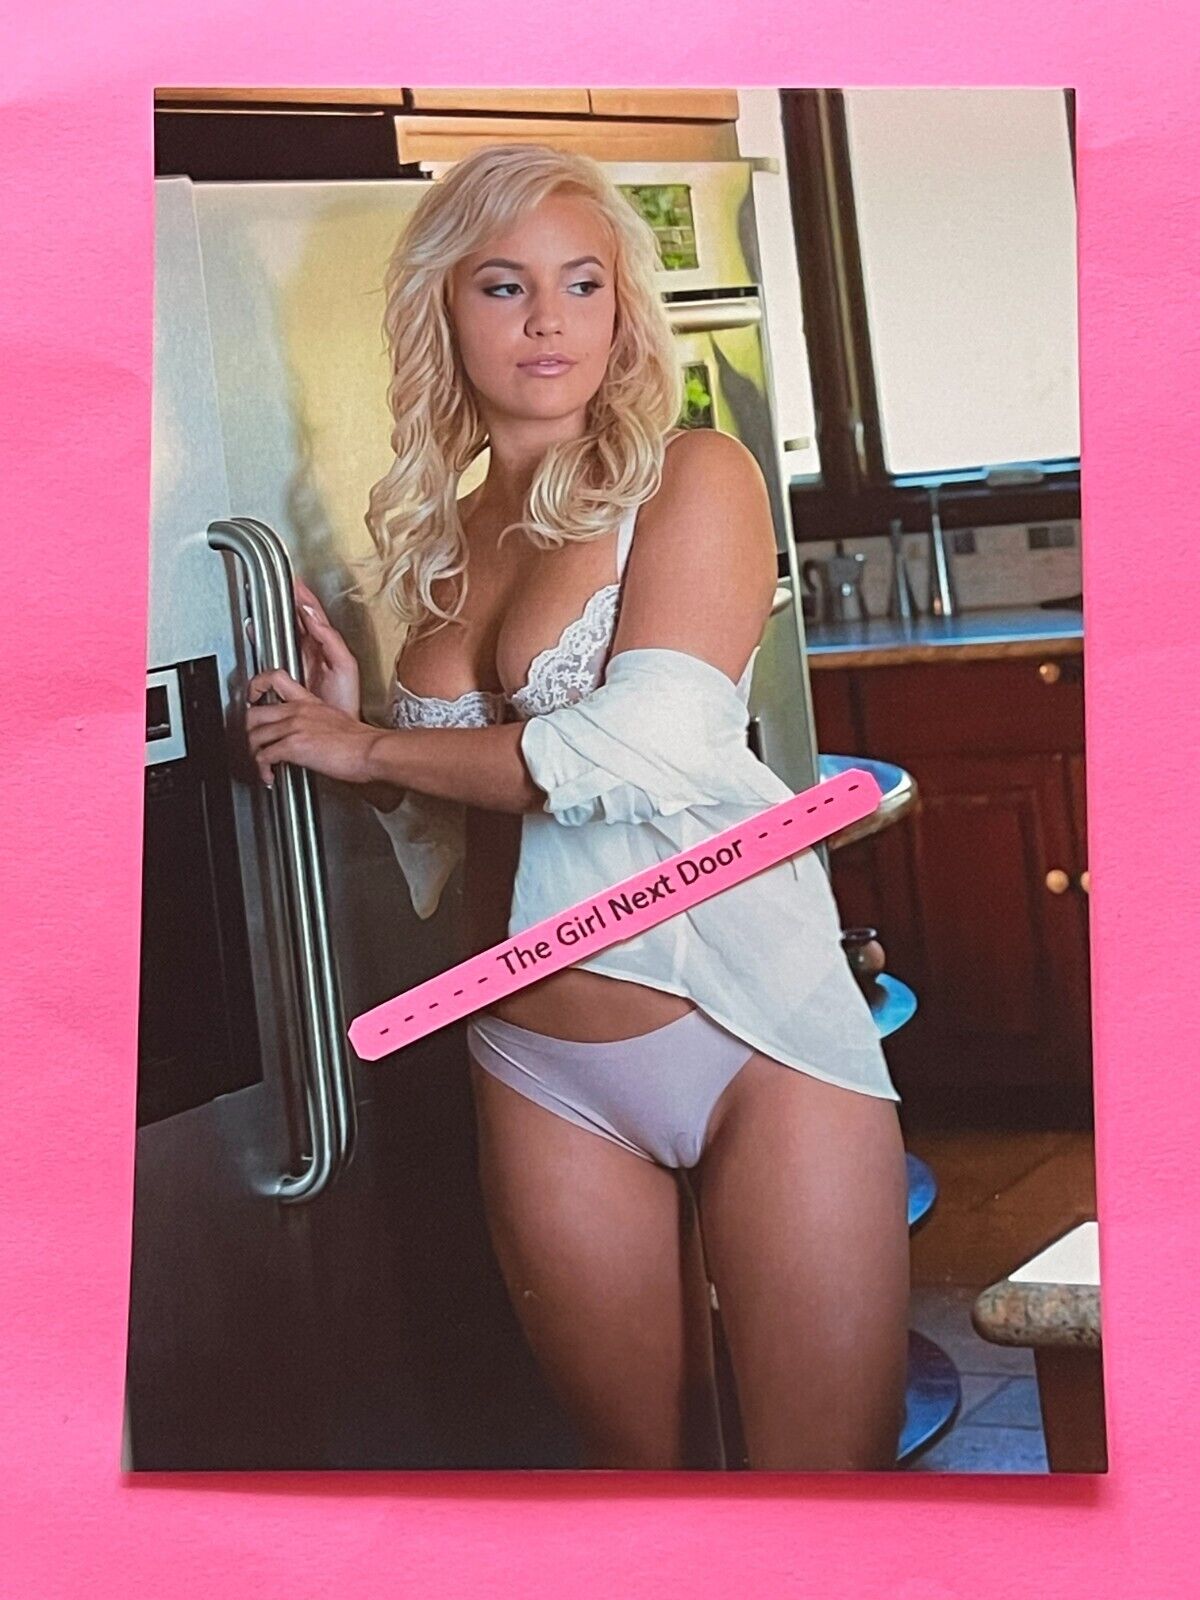 Found 4X6 Art Photo of The Hot Girl Next Door Beautiful Woman Sexy Blond Model